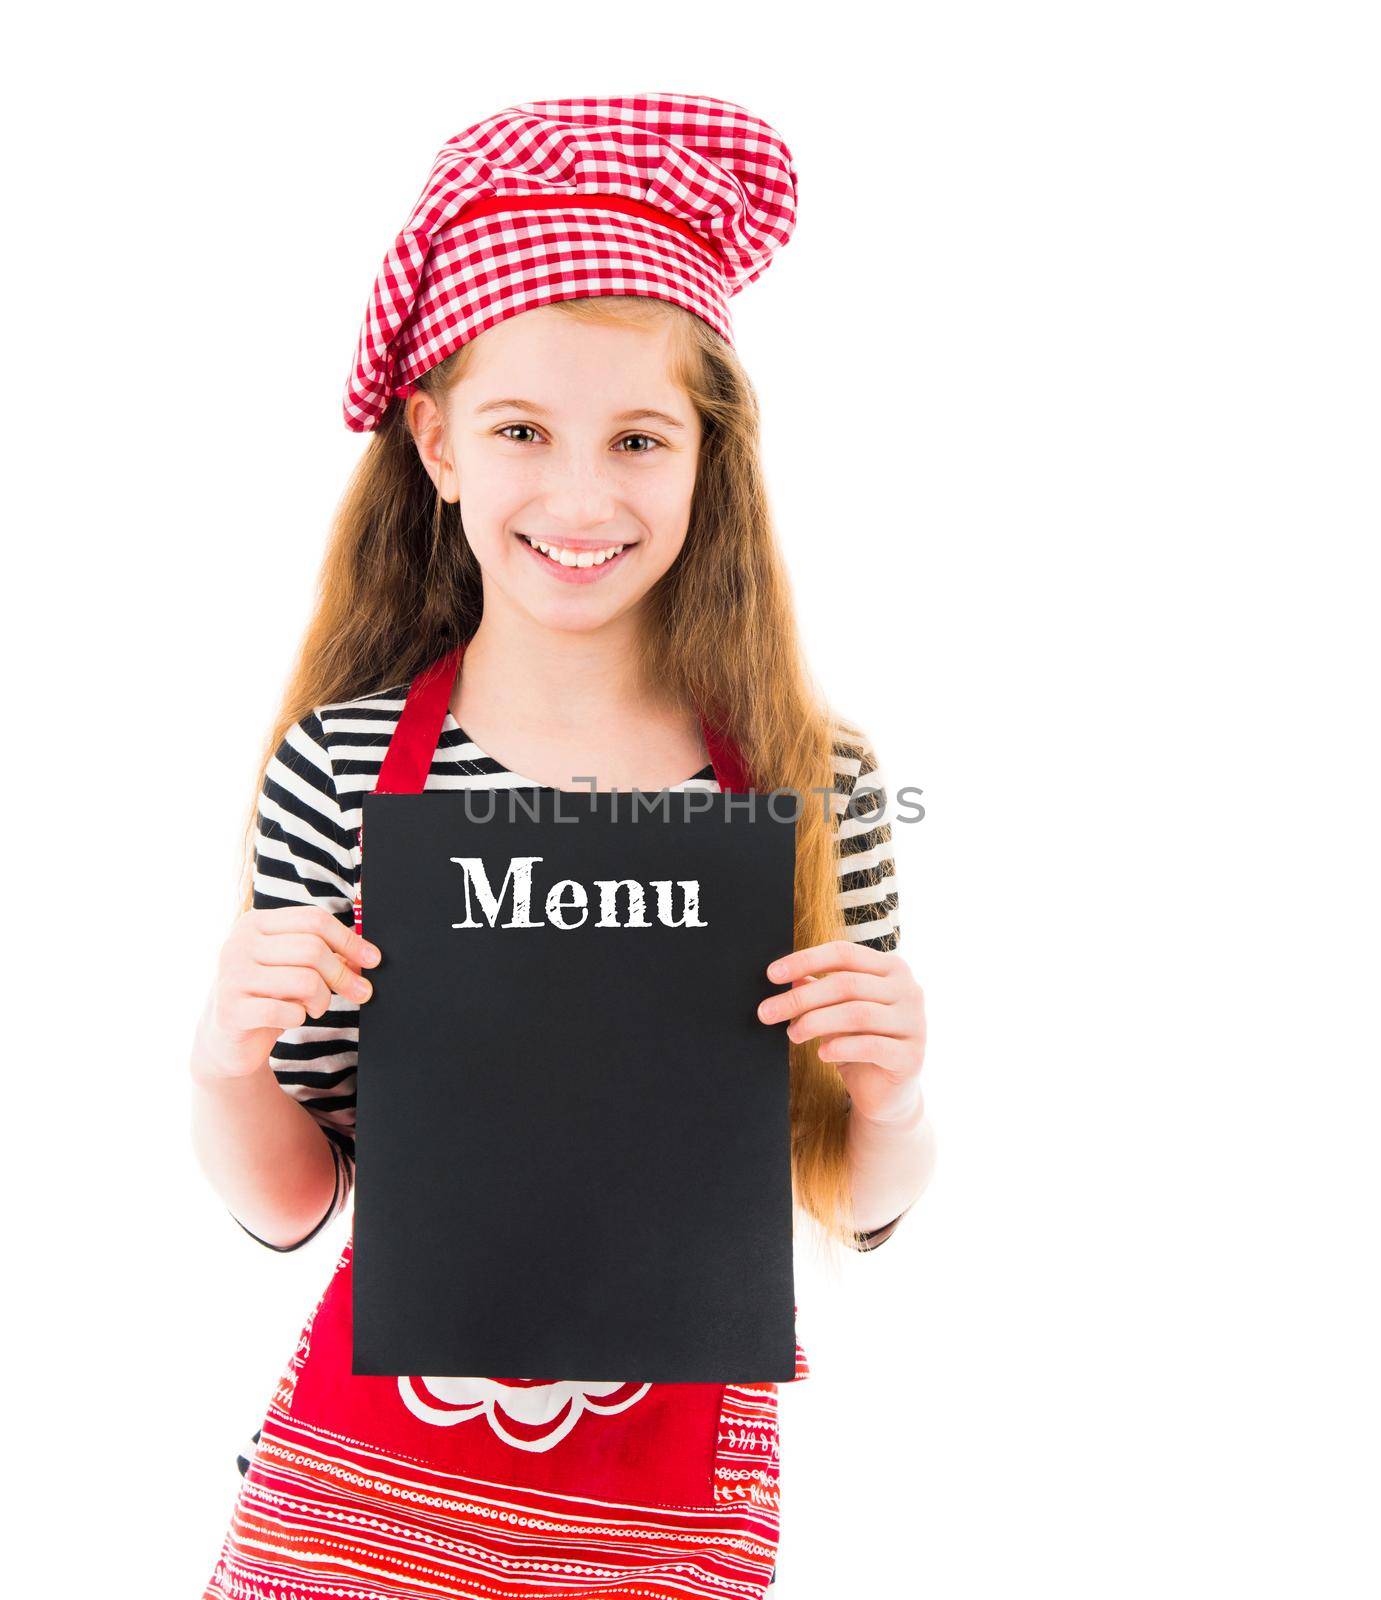 Little girl in chef uniform holding menu mockup by GekaSkr